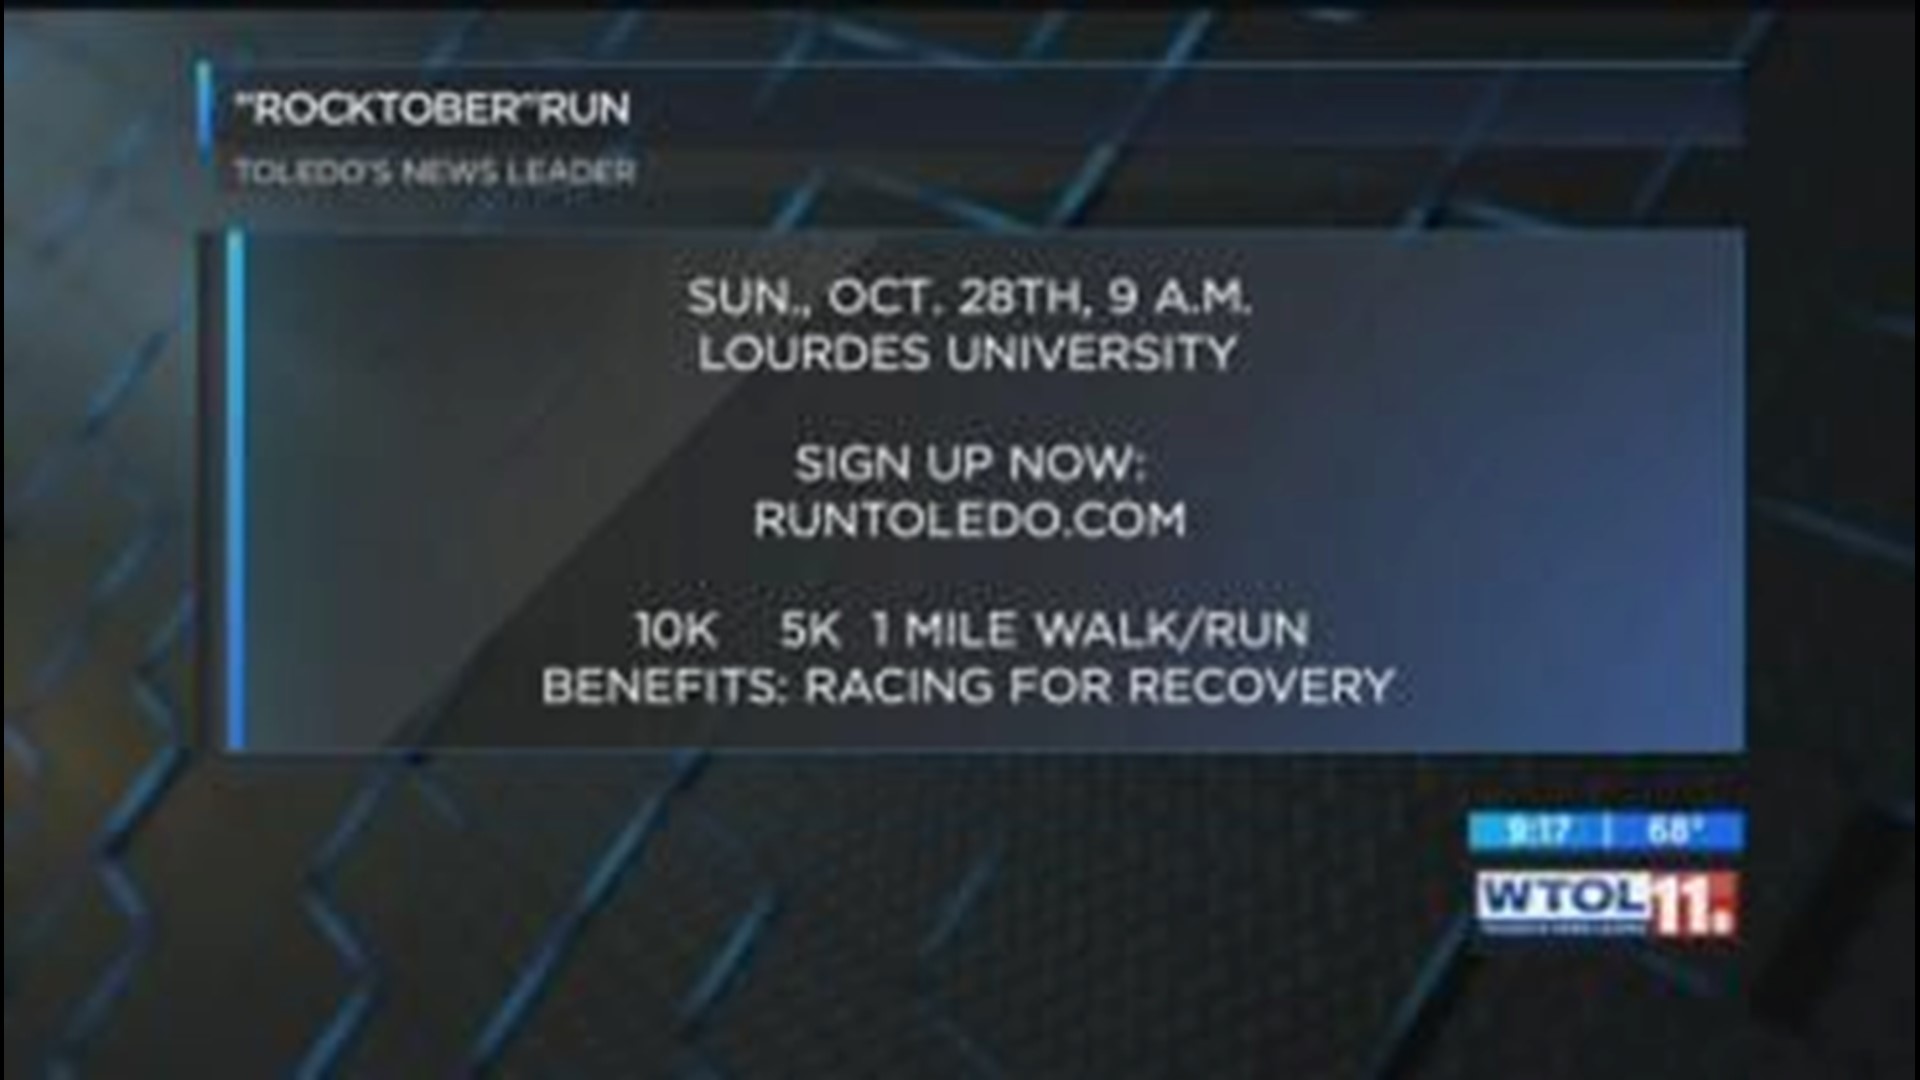 "Rocktober" Run benefits Racing for Recovery